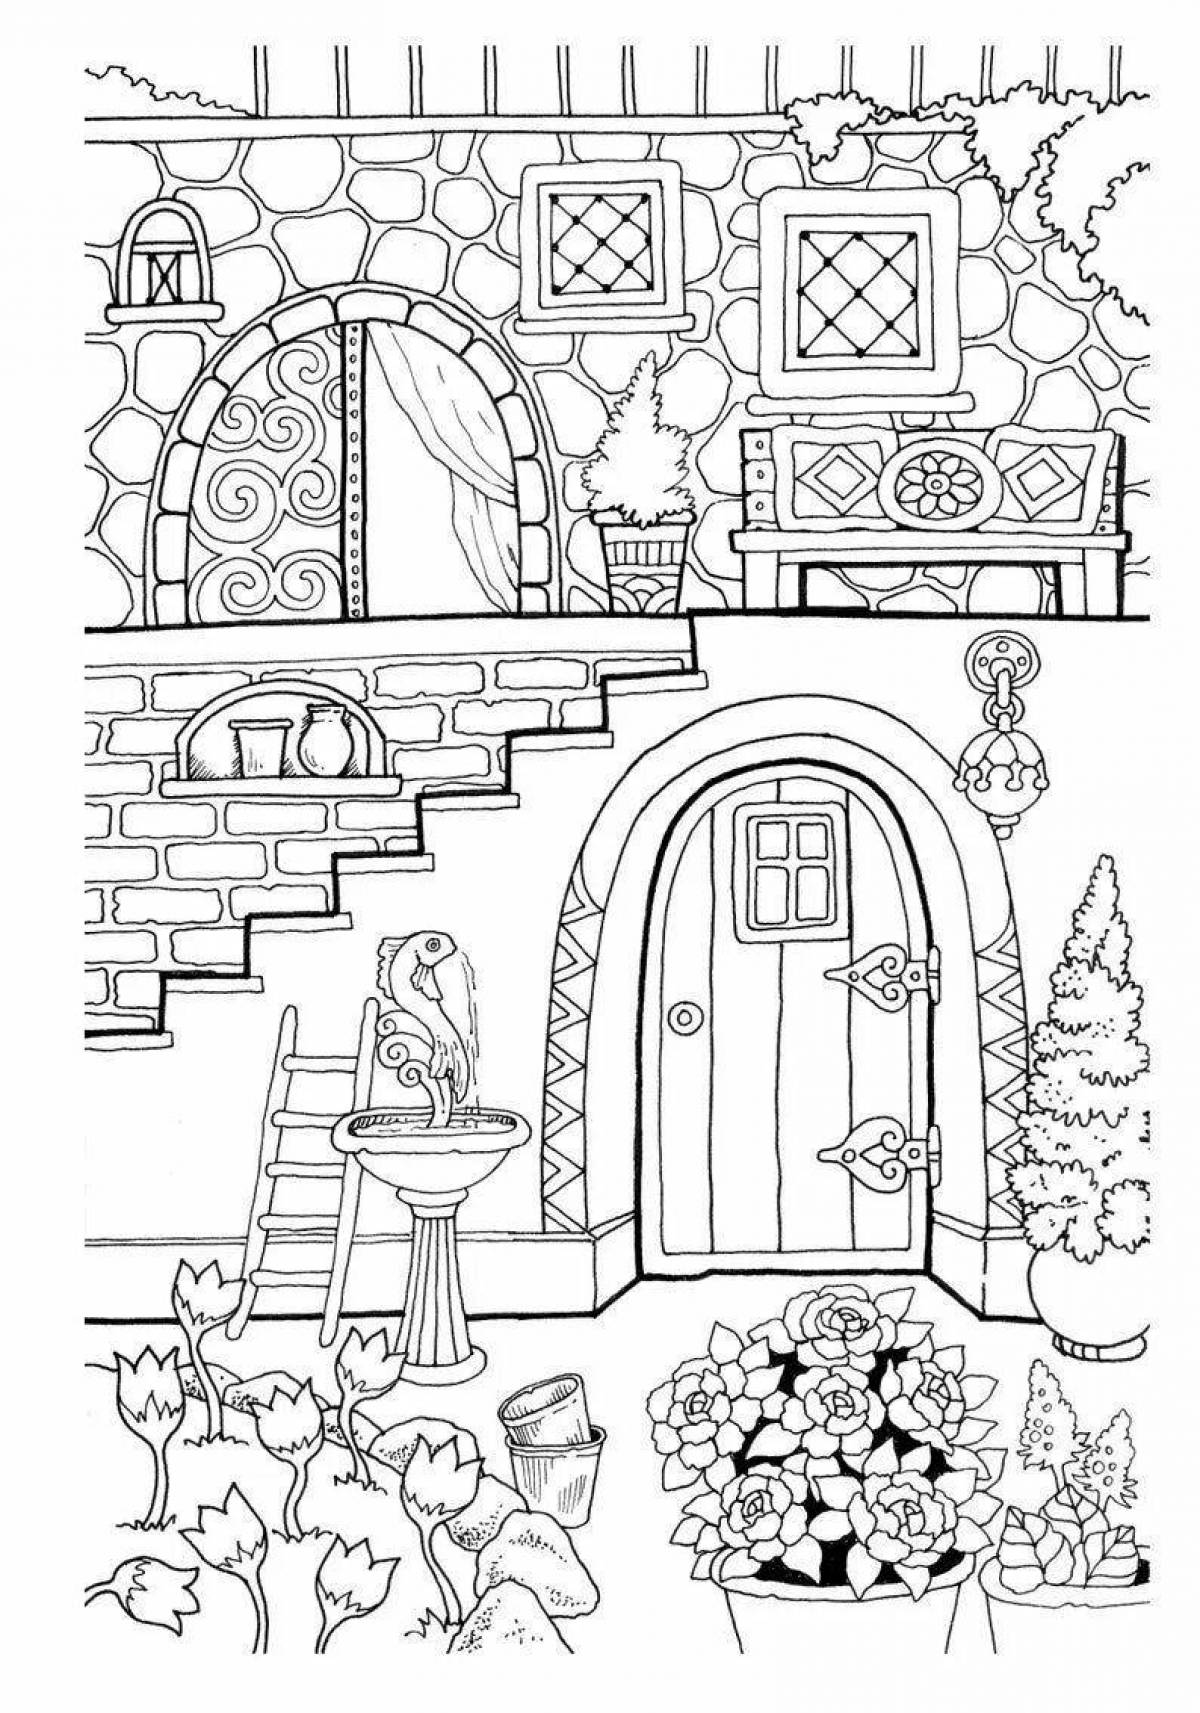 Regal rich house coloring book